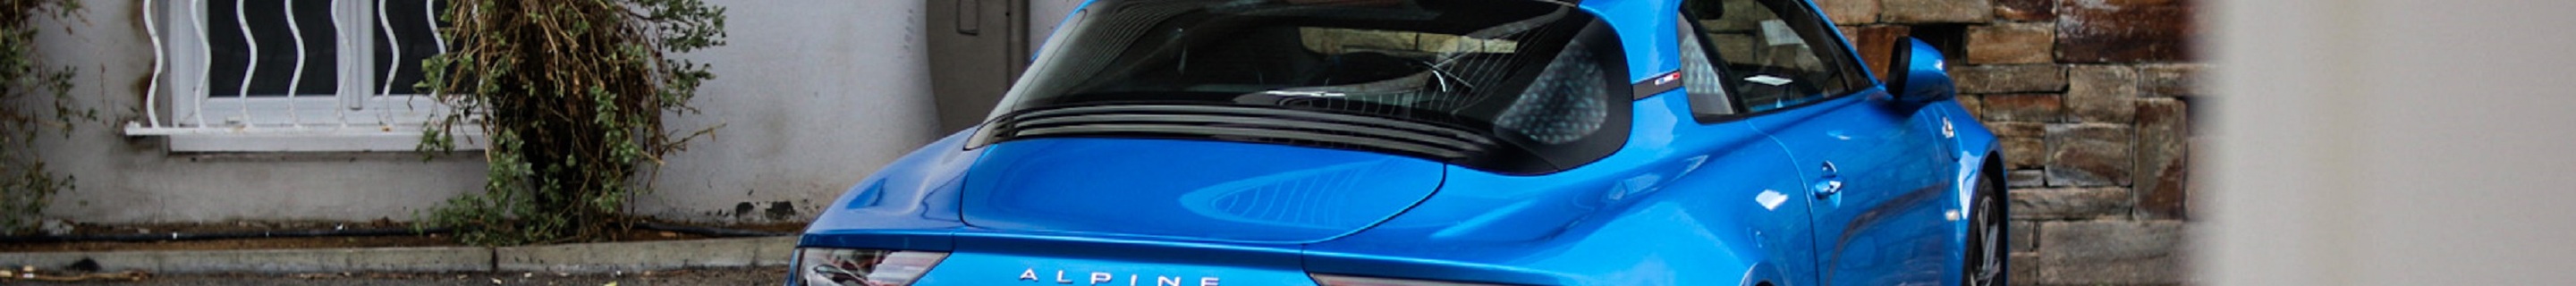 Alpine A110 Première Edition